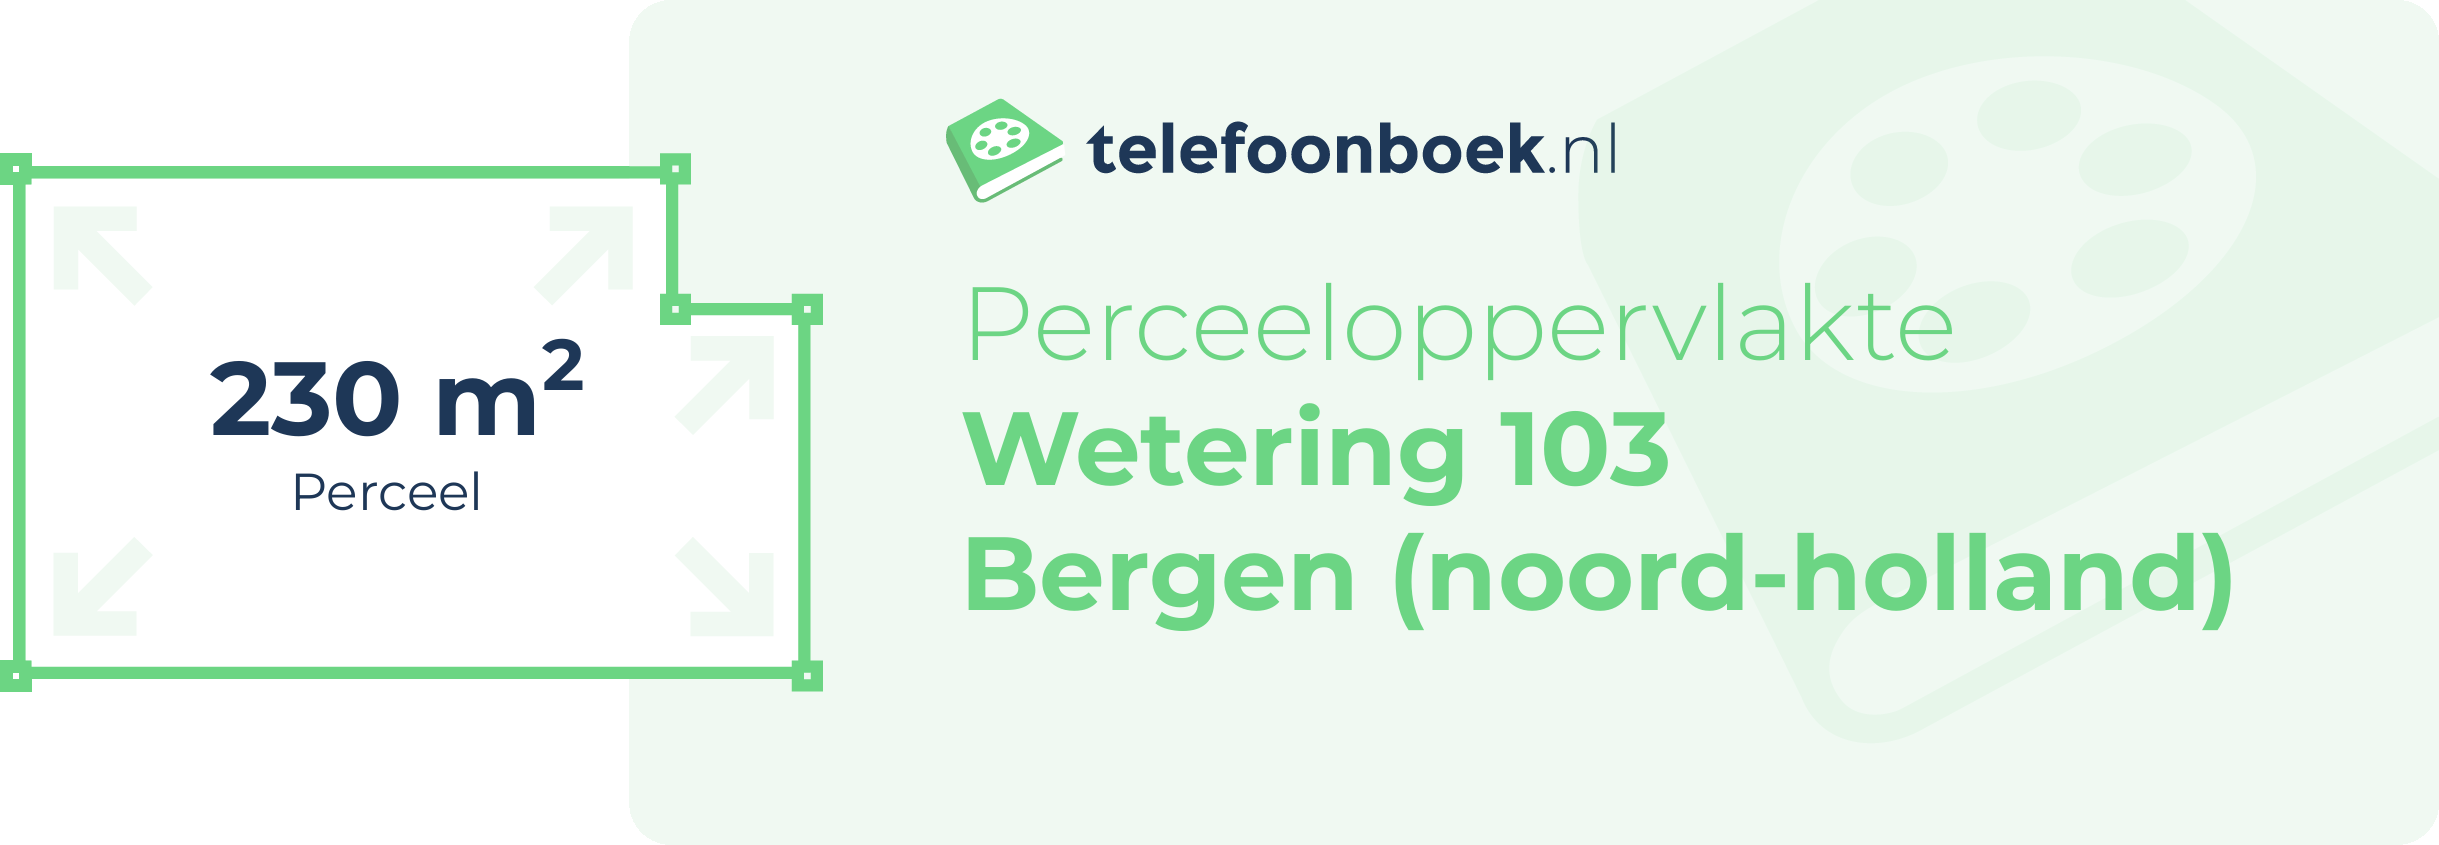 Perceeloppervlakte Wetering 103 Bergen (Noord-Holland)